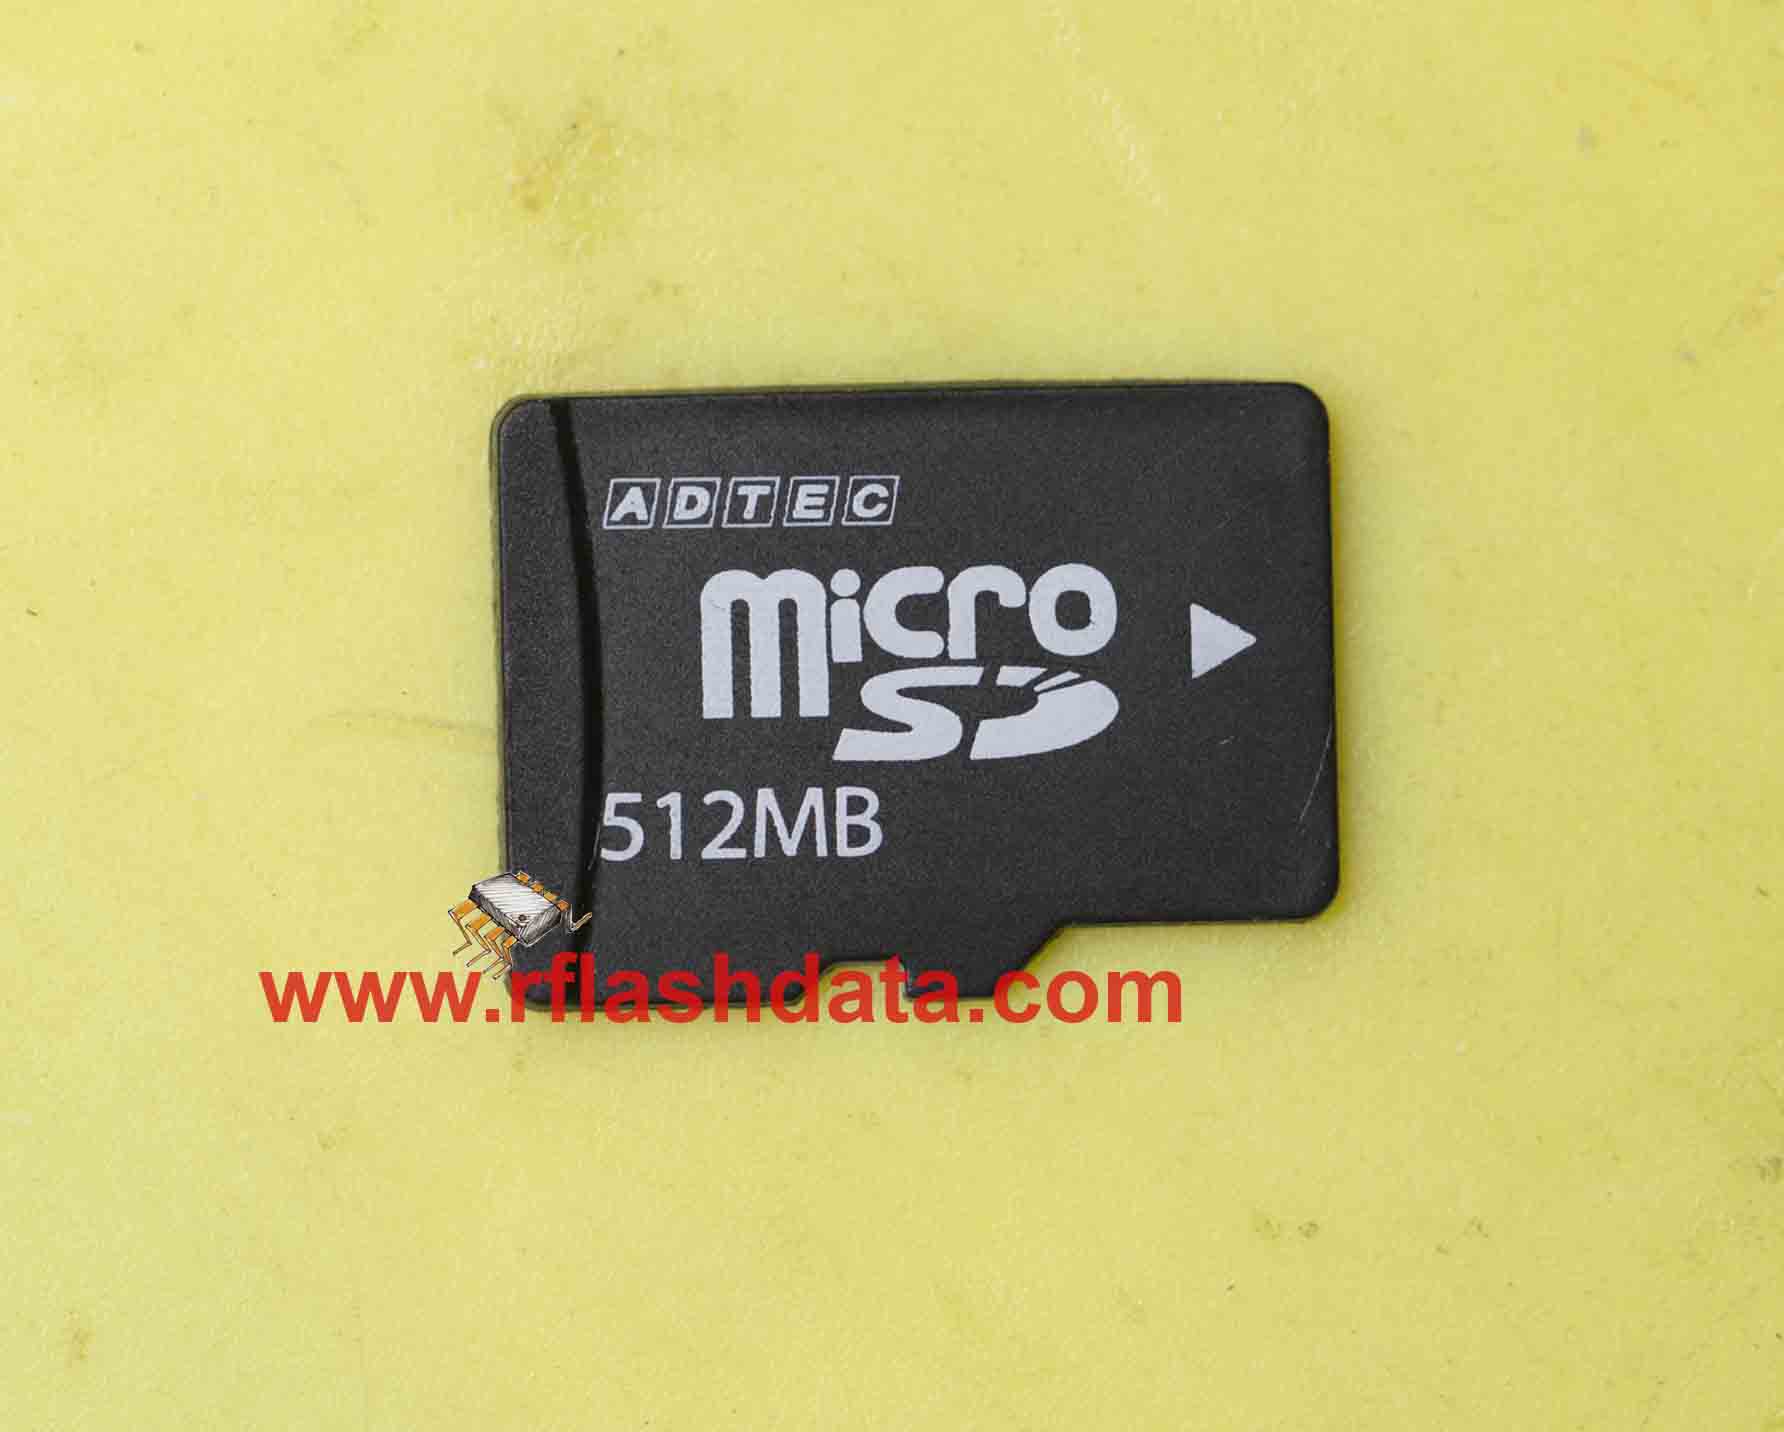 ADTEC 512MB microSD pniout